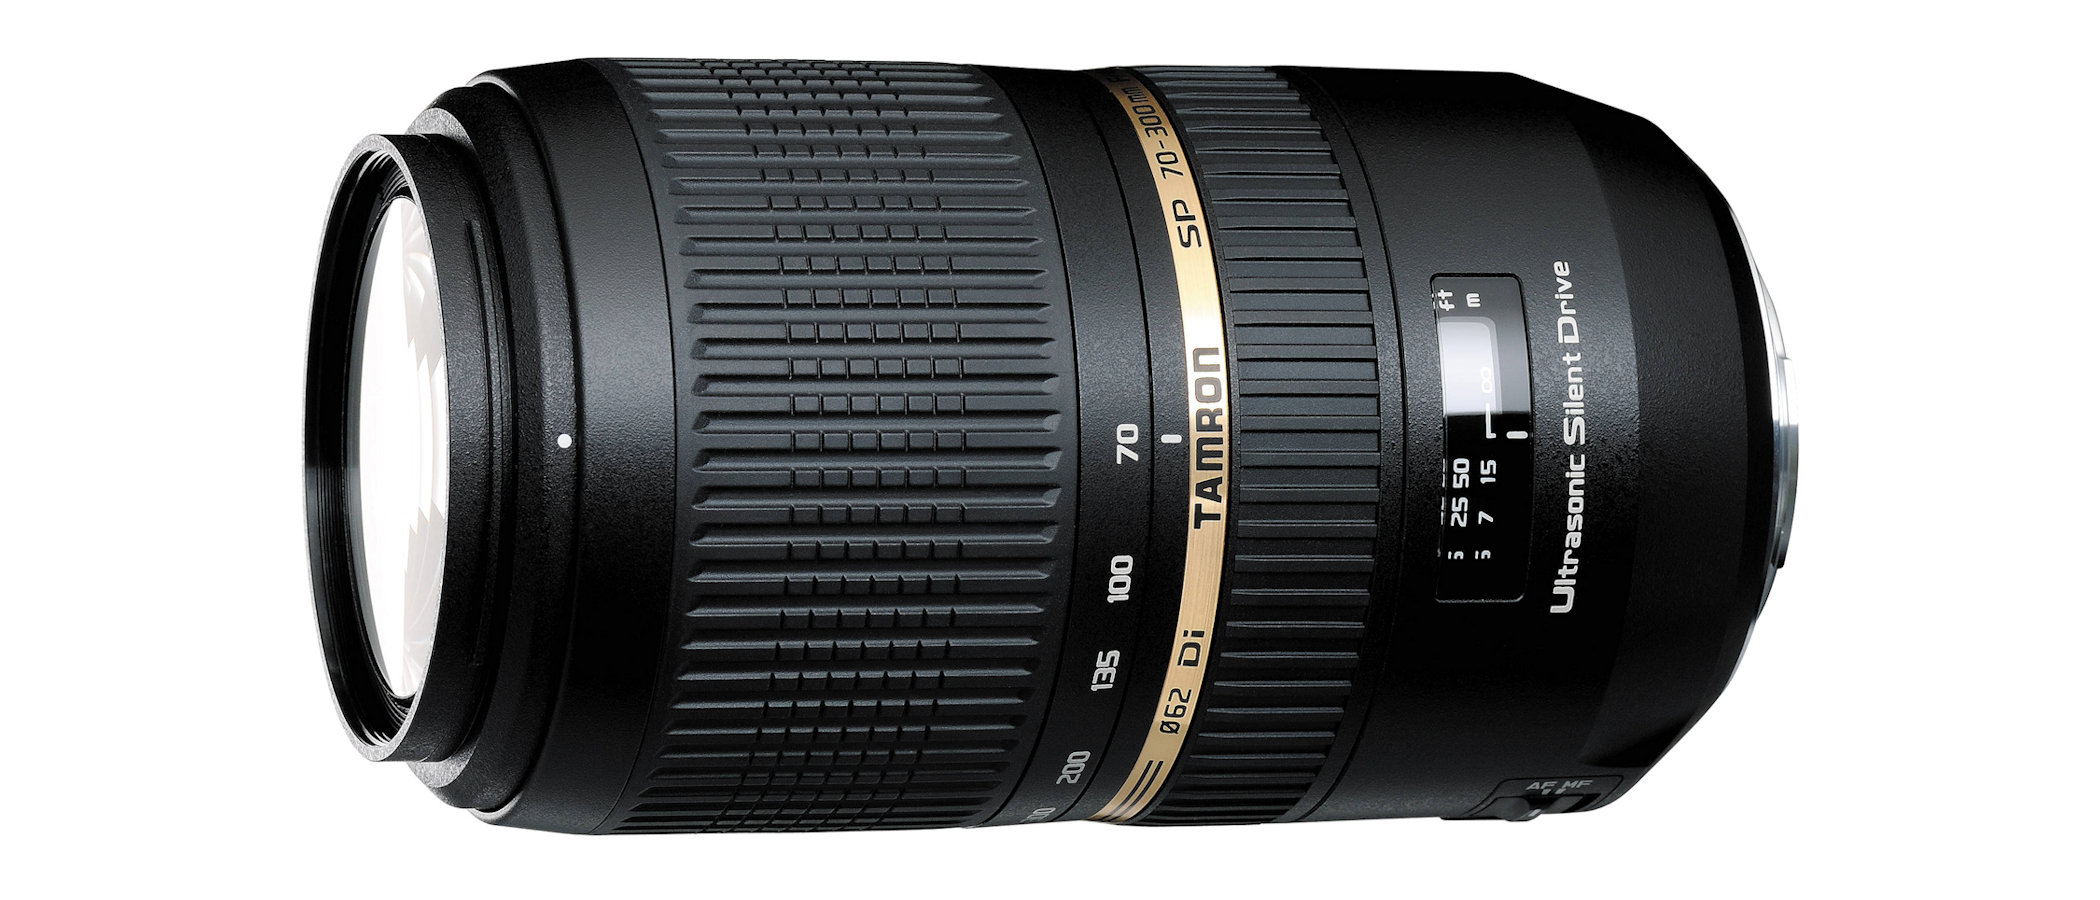 Tamron SP 70-300mm f/4-5.6 Di VC USD review | Digital Camera